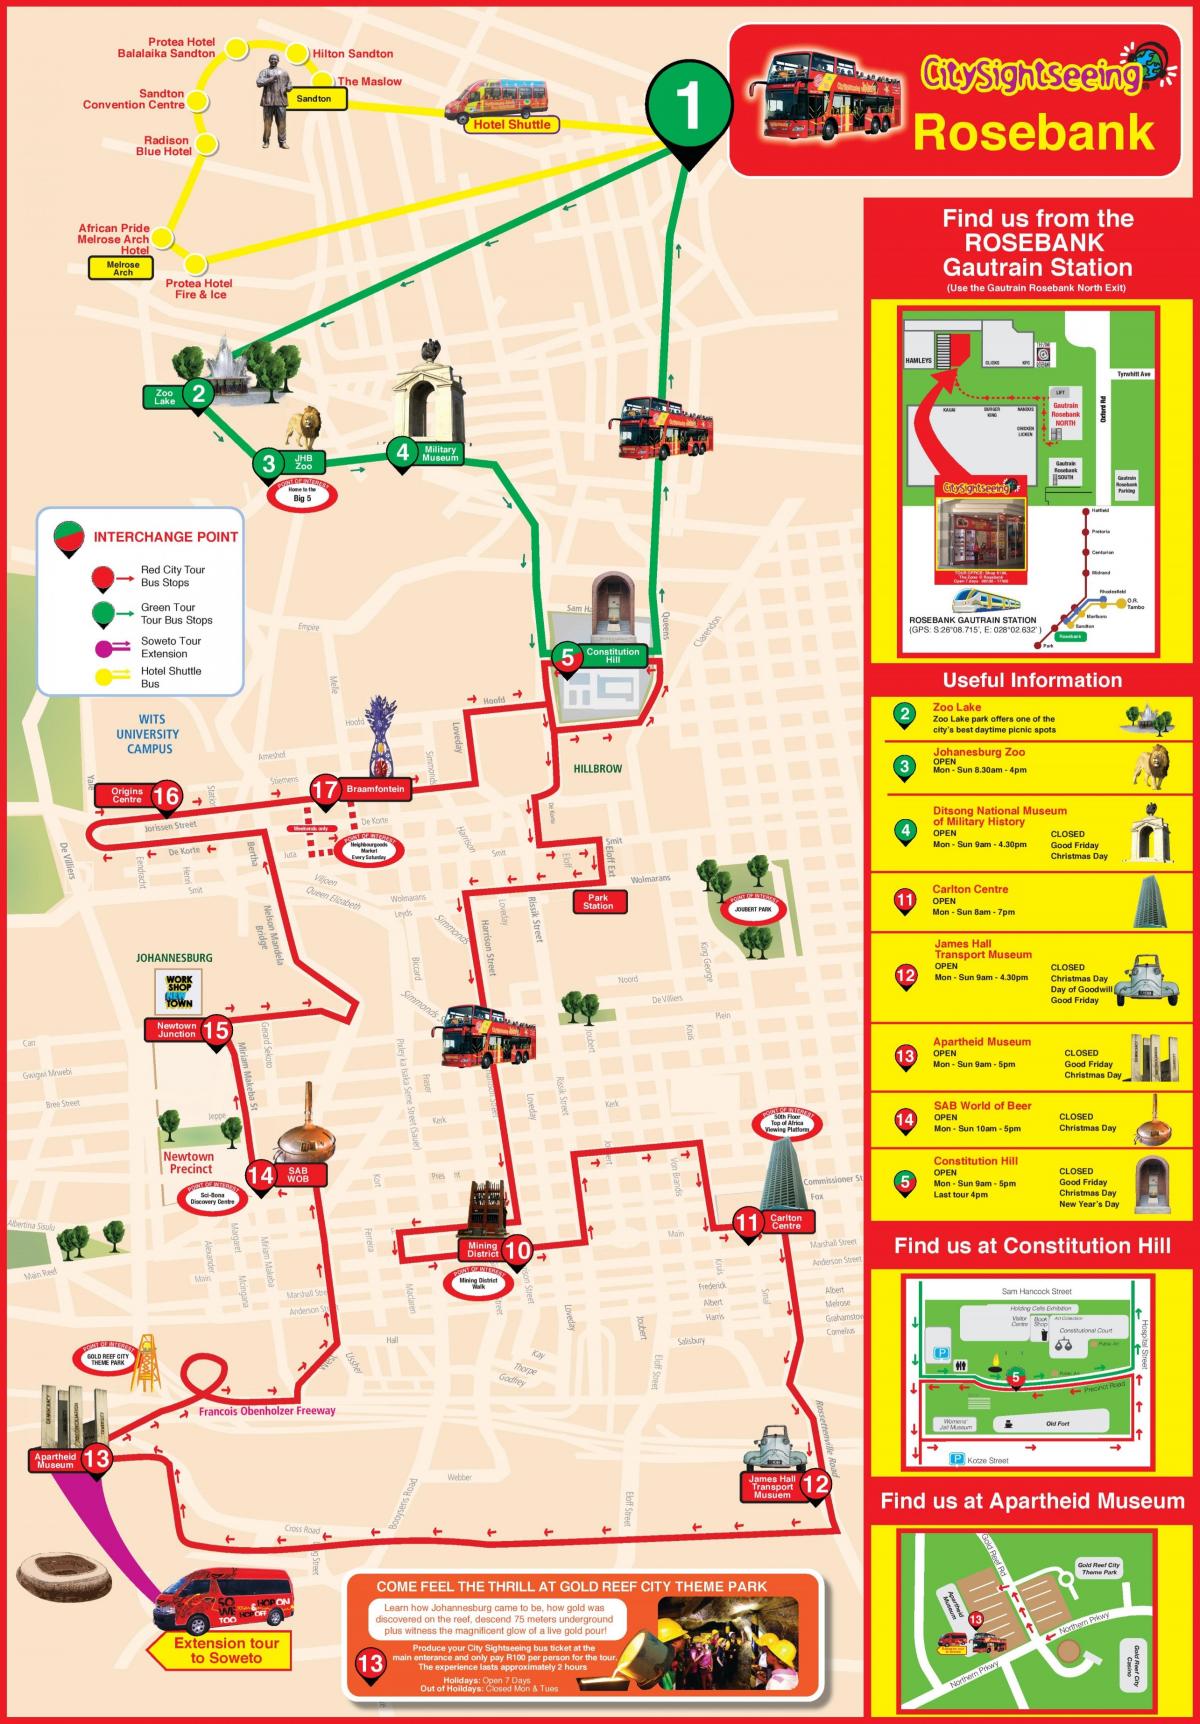 Joanesburgo (Joburg Jozi) Mapa dos passeios de ônibus Hop On Hop Off